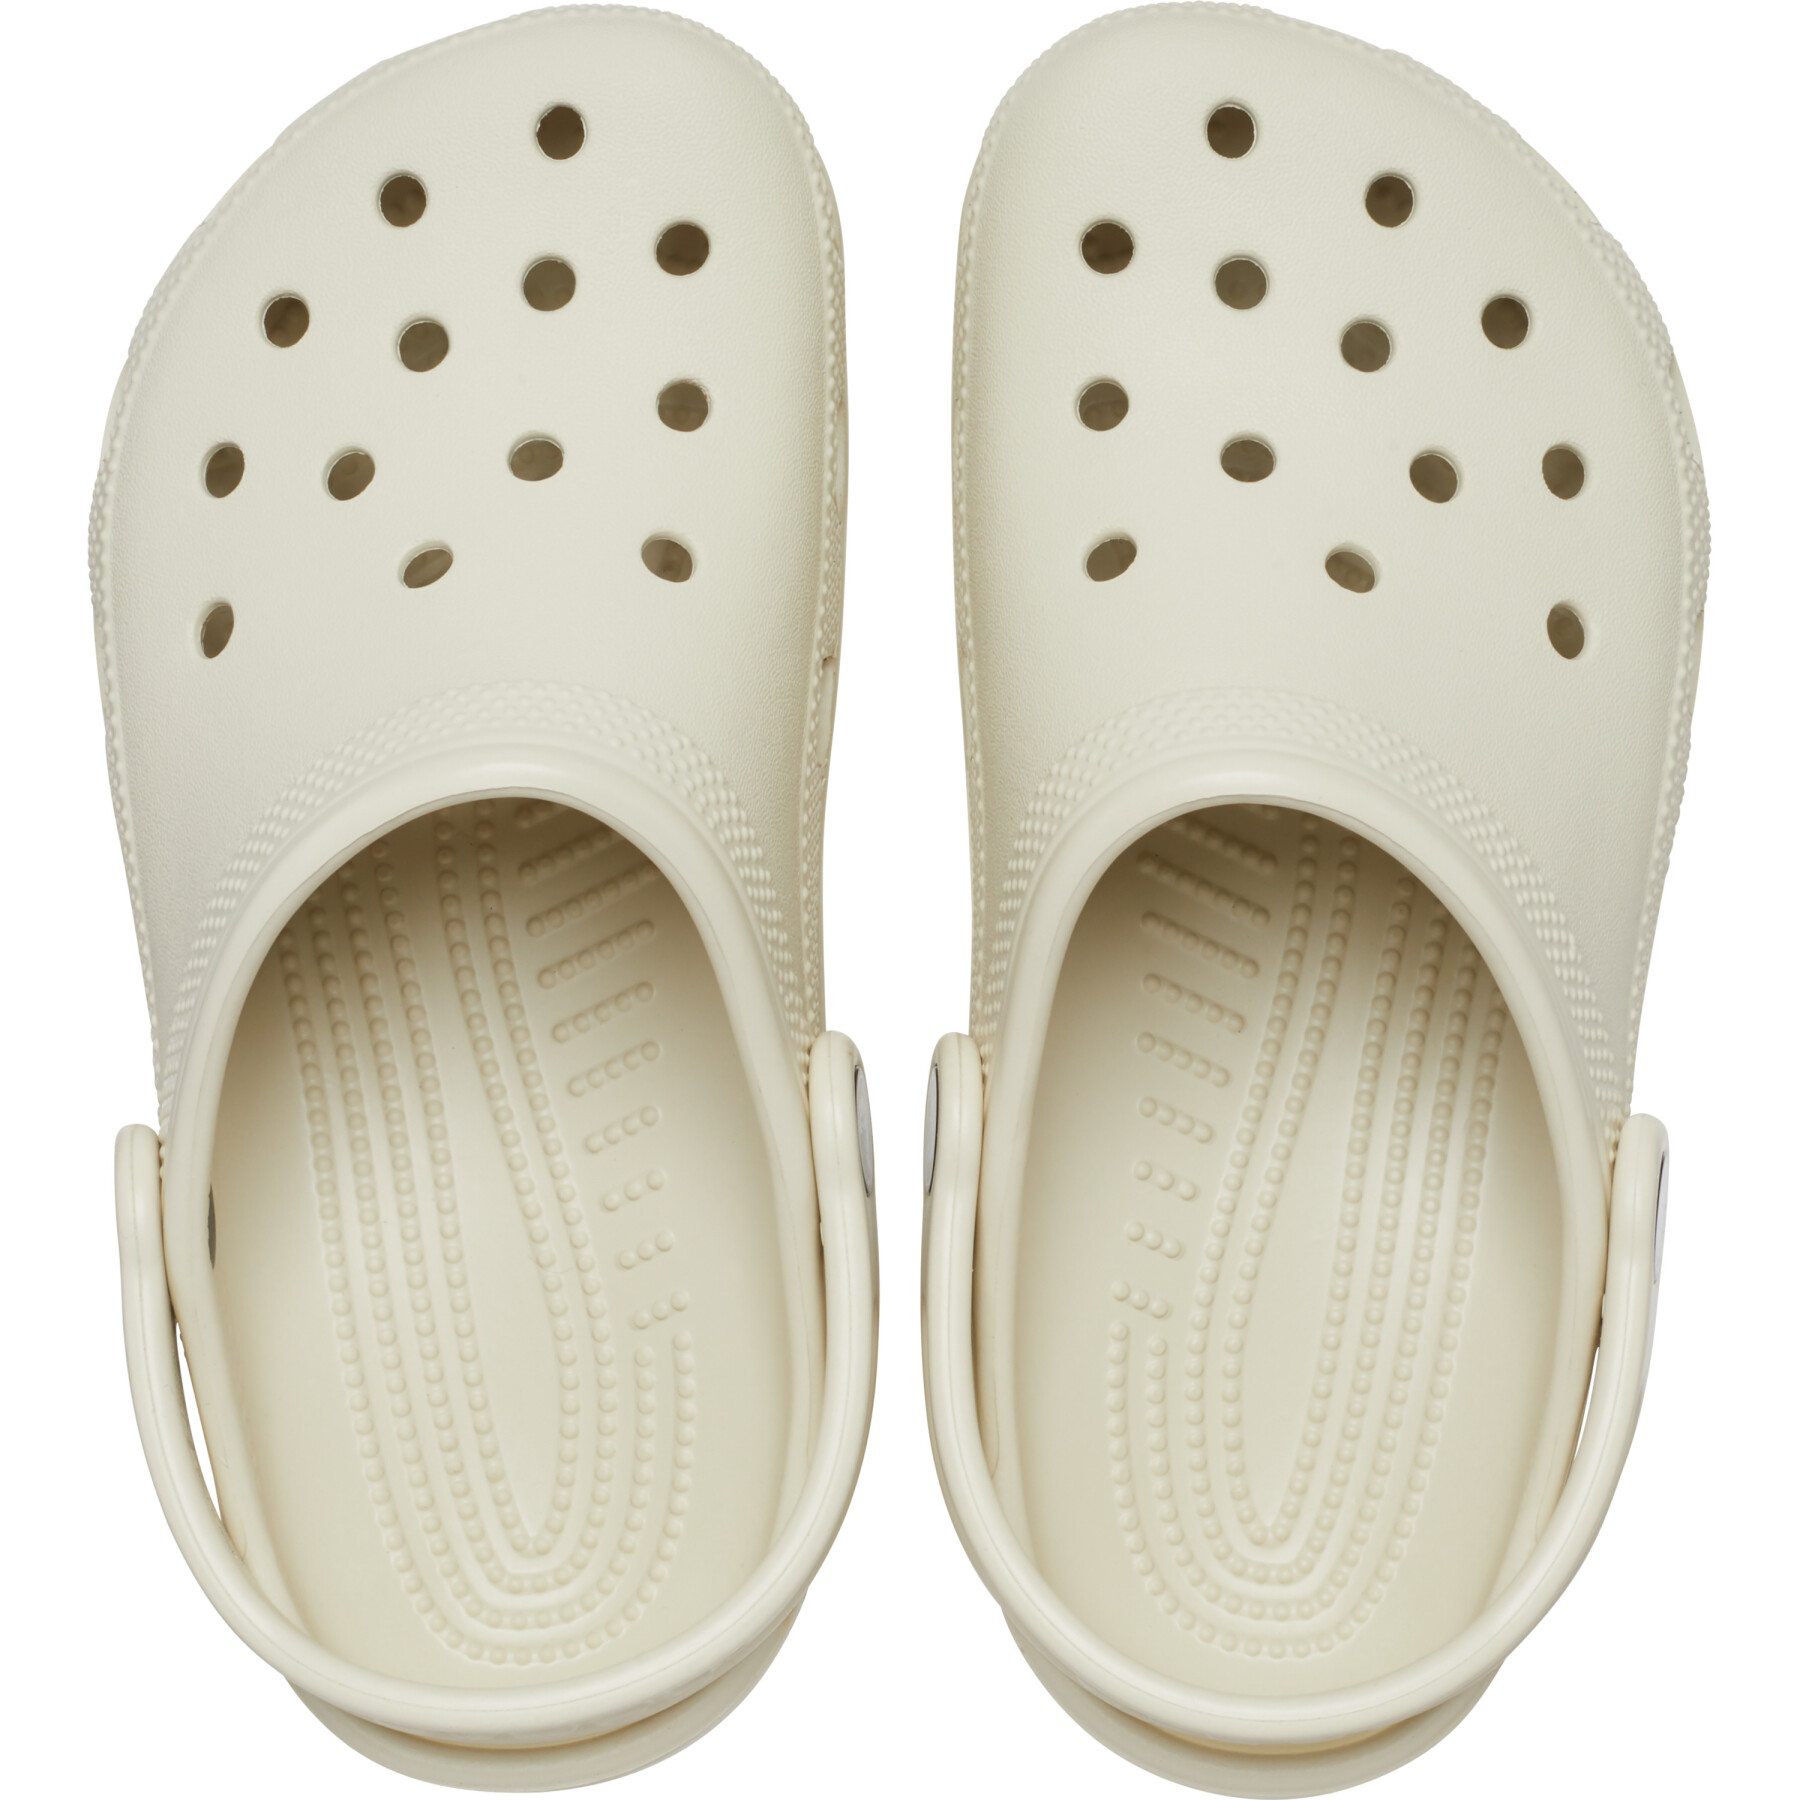 Children's clogs Crocs Classic